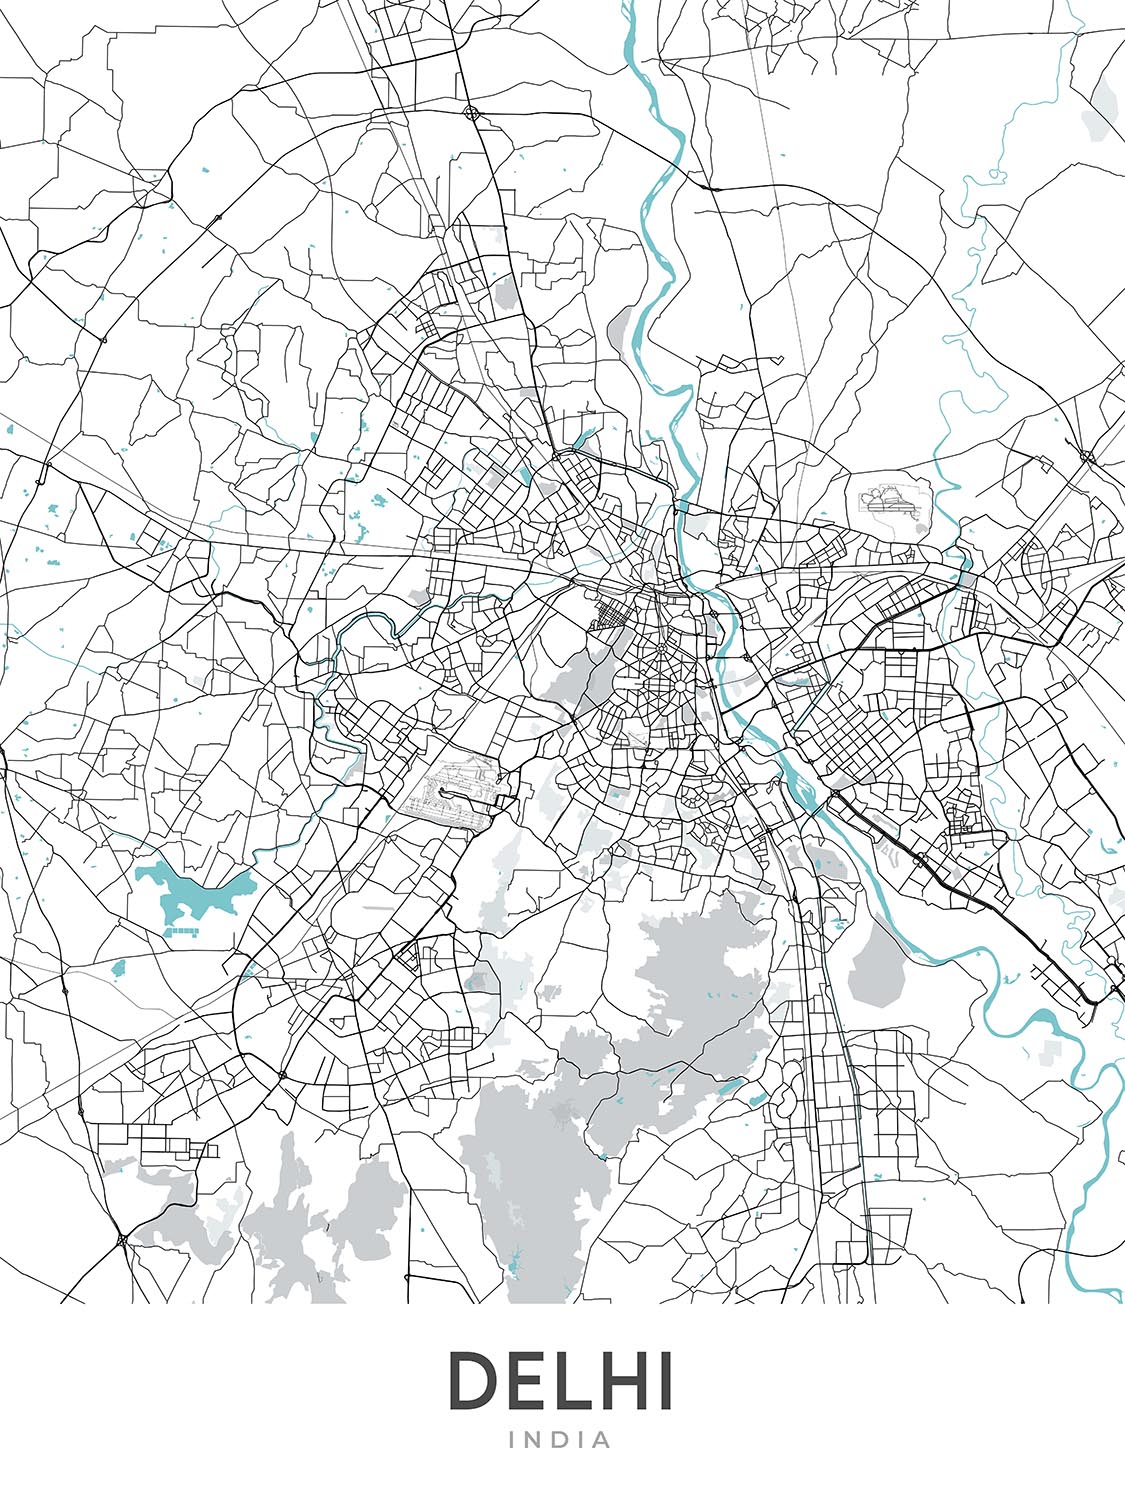 Plan de la ville moderne de Delhi, Inde : Connaught Place, India Gate, Fort Rouge, NH 44, Ring Road